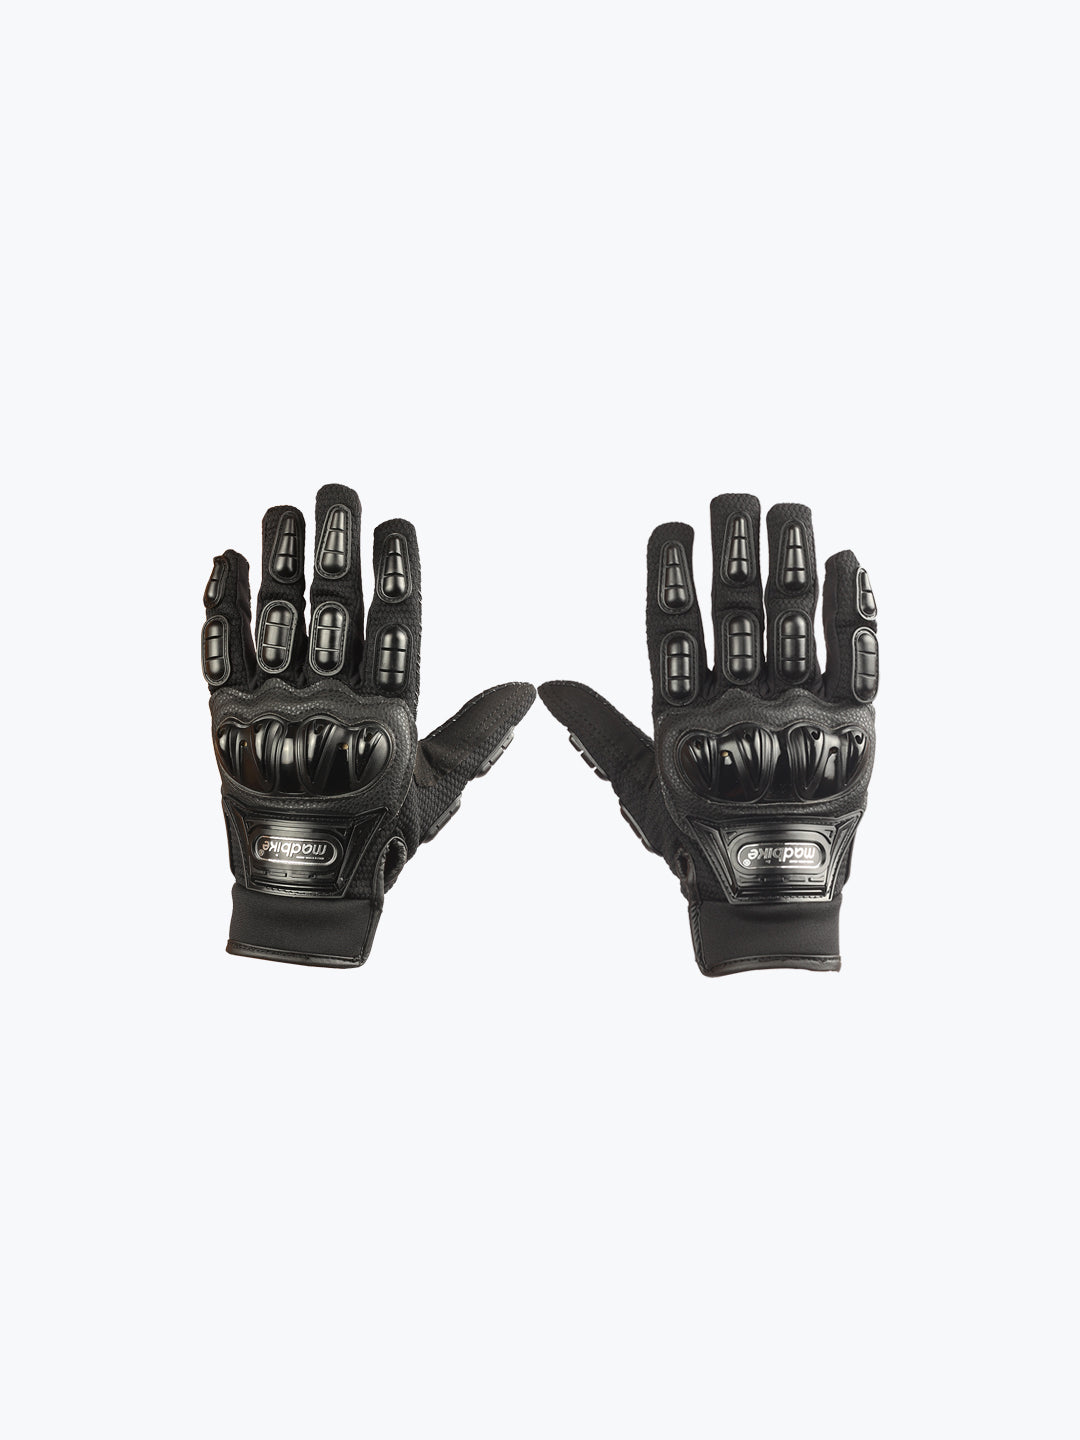 MADBIKE Glove Black